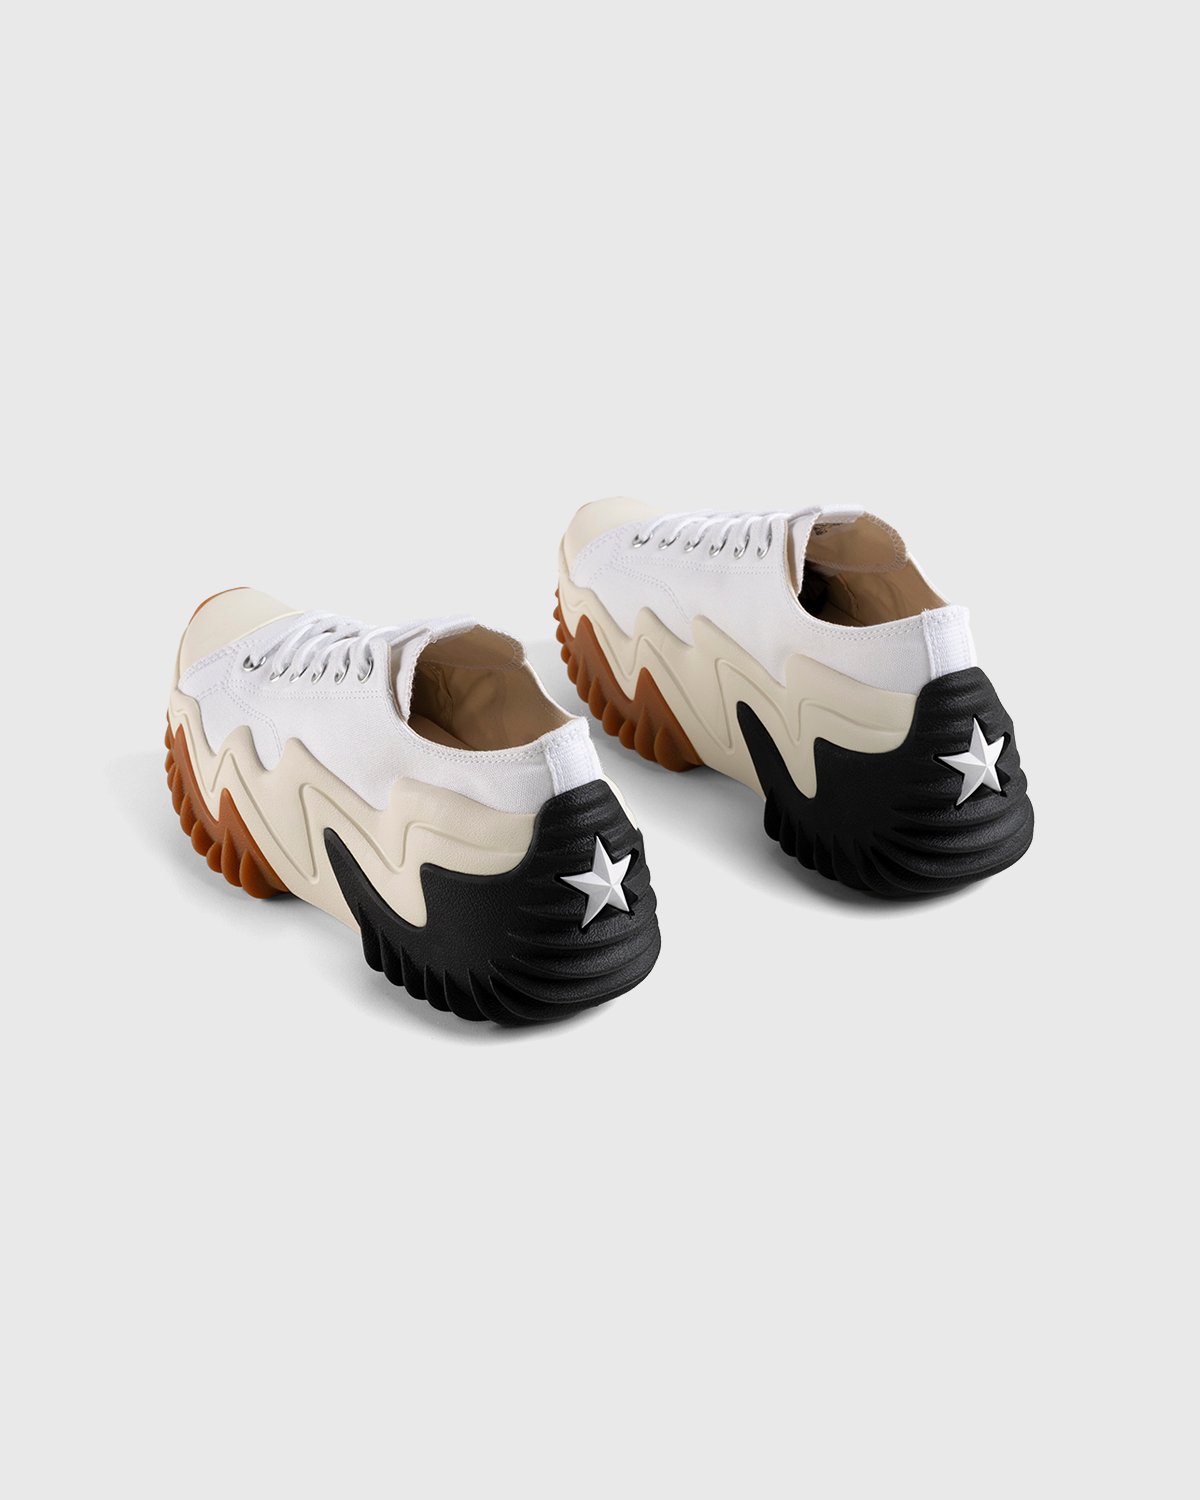 Converse - Run Star Motion Ox White/Black/Egret - Footwear - White - Image 4